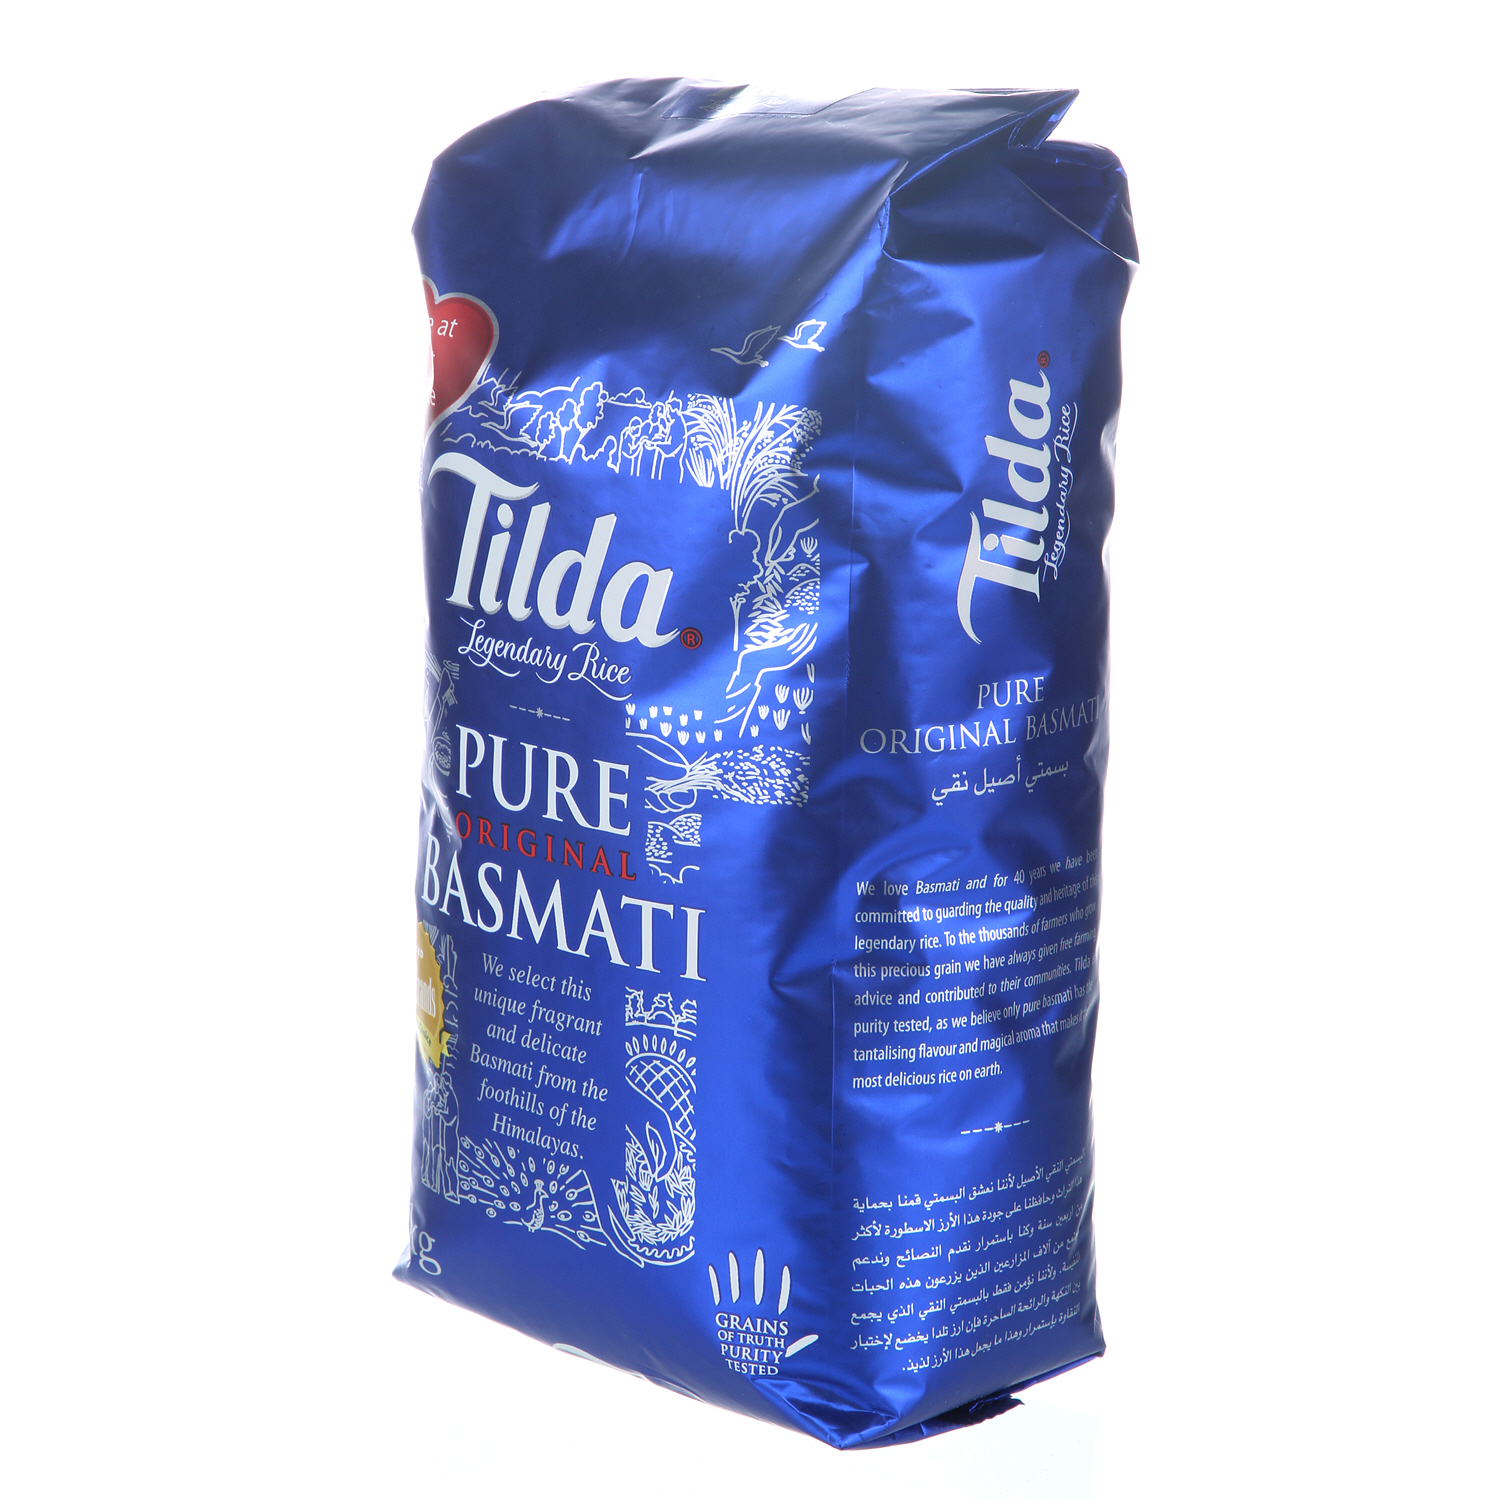 Tilda Basmati Rice 2Kg